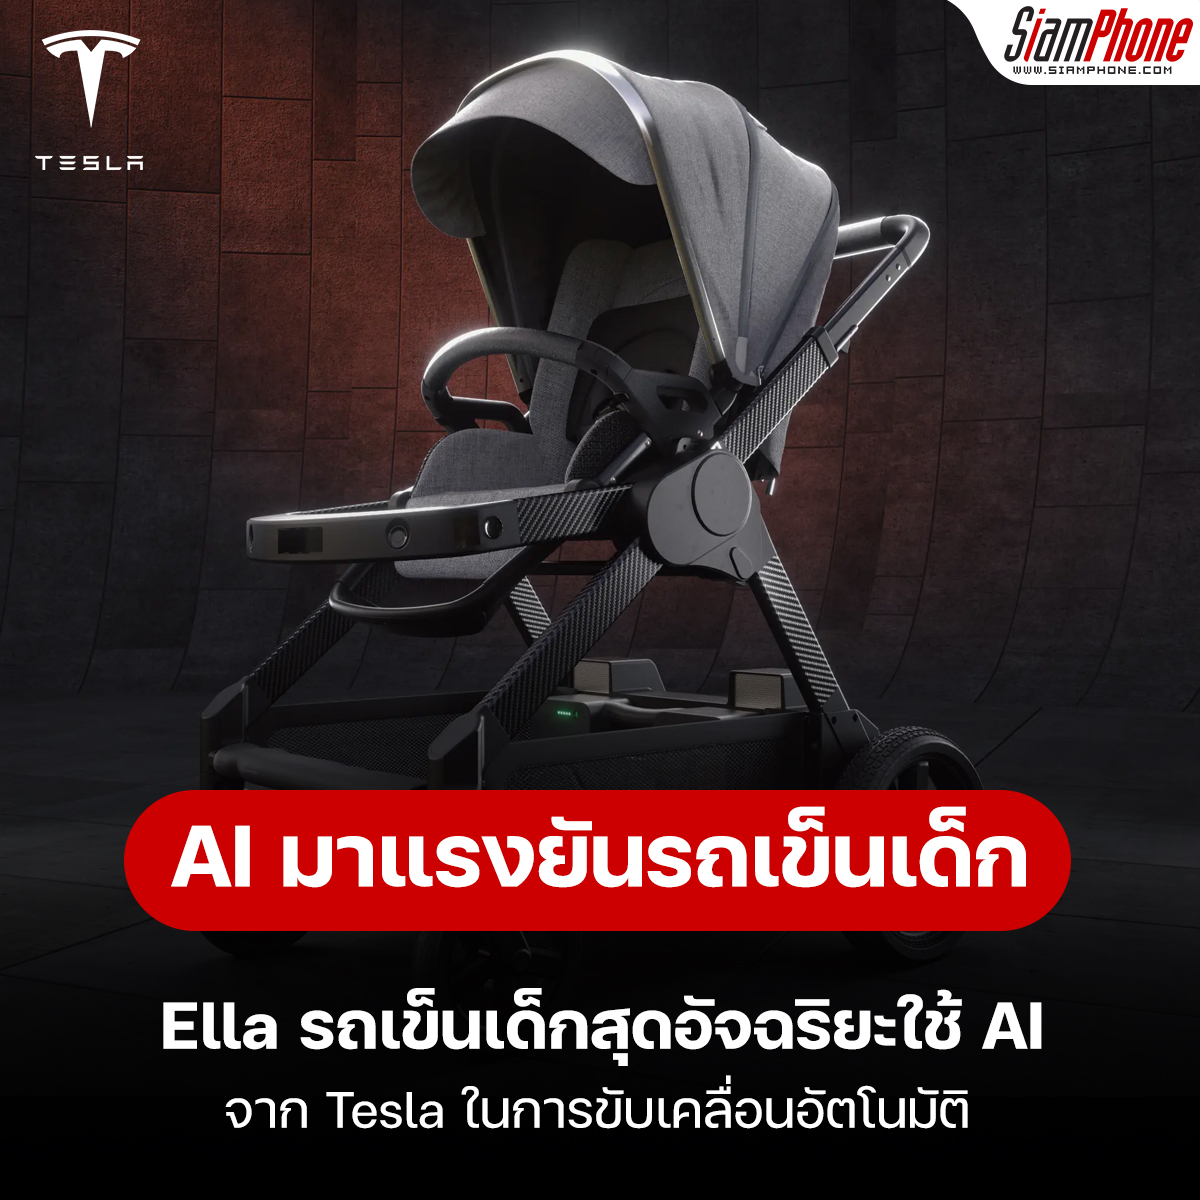 Ella, the smart baby stroller uses Tesla’s AI for autonomous driving